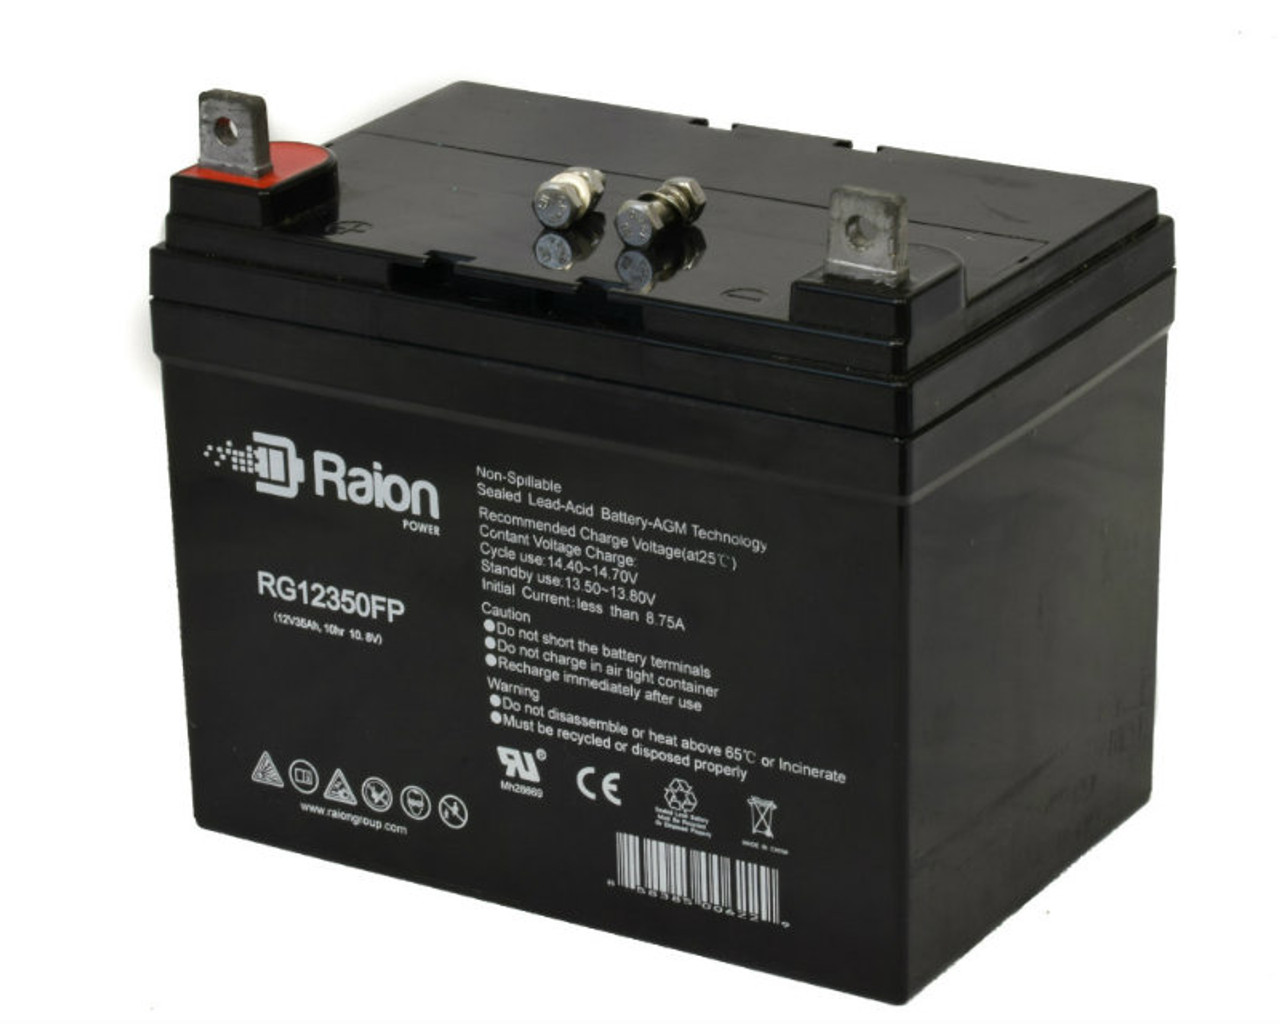 Raion Power 12V 35Ah Replacement UPS Battery Cartridge for Alpha Technologies EBP 48A (032-031-XX)